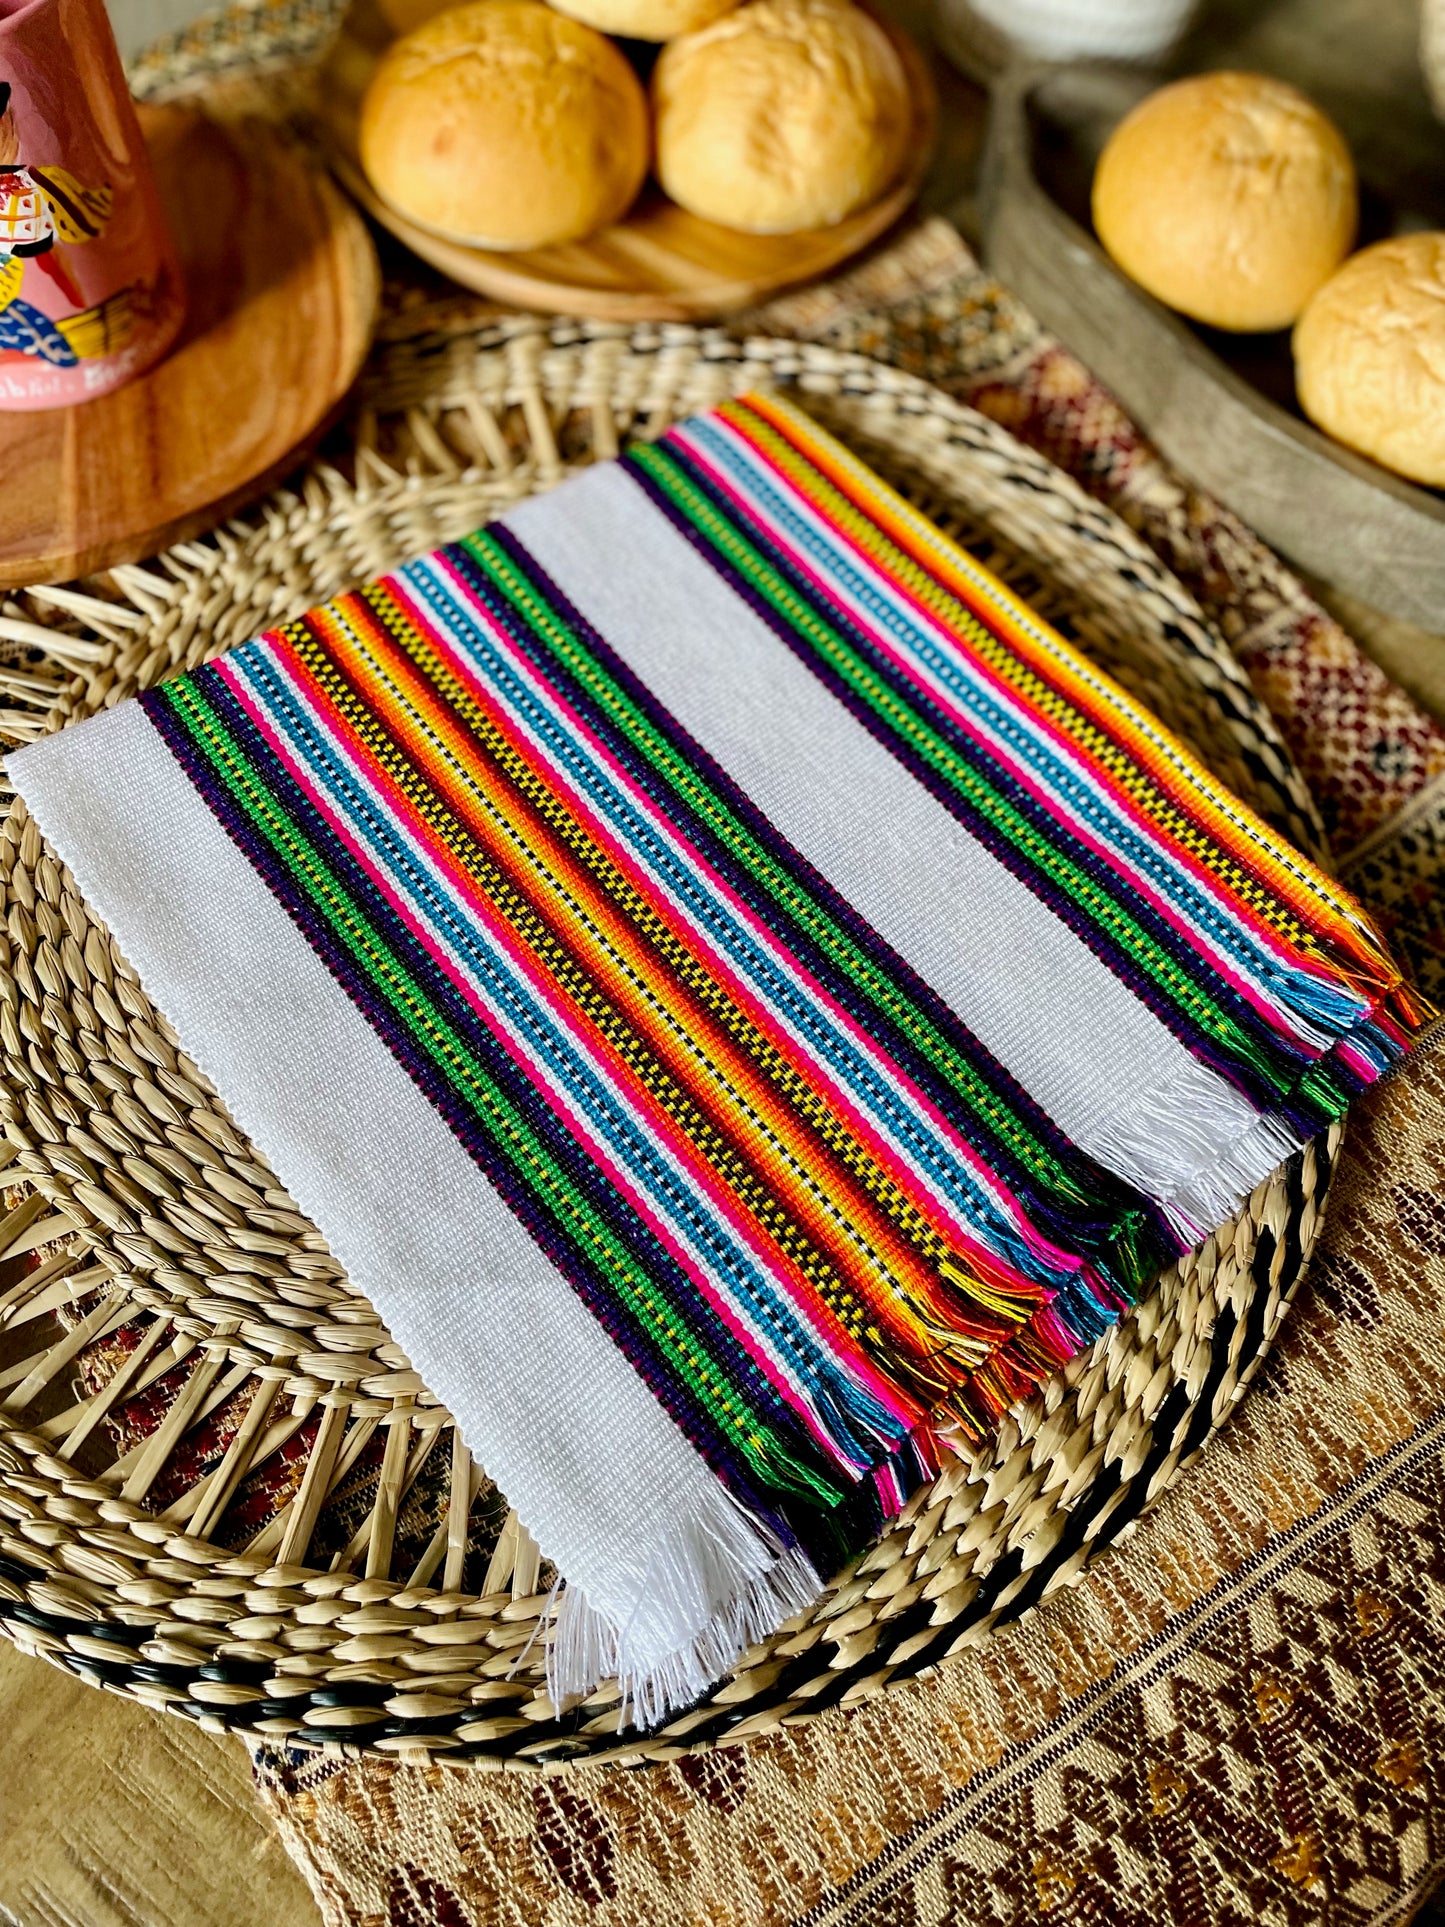 Colorful handwoven tortilla wraps